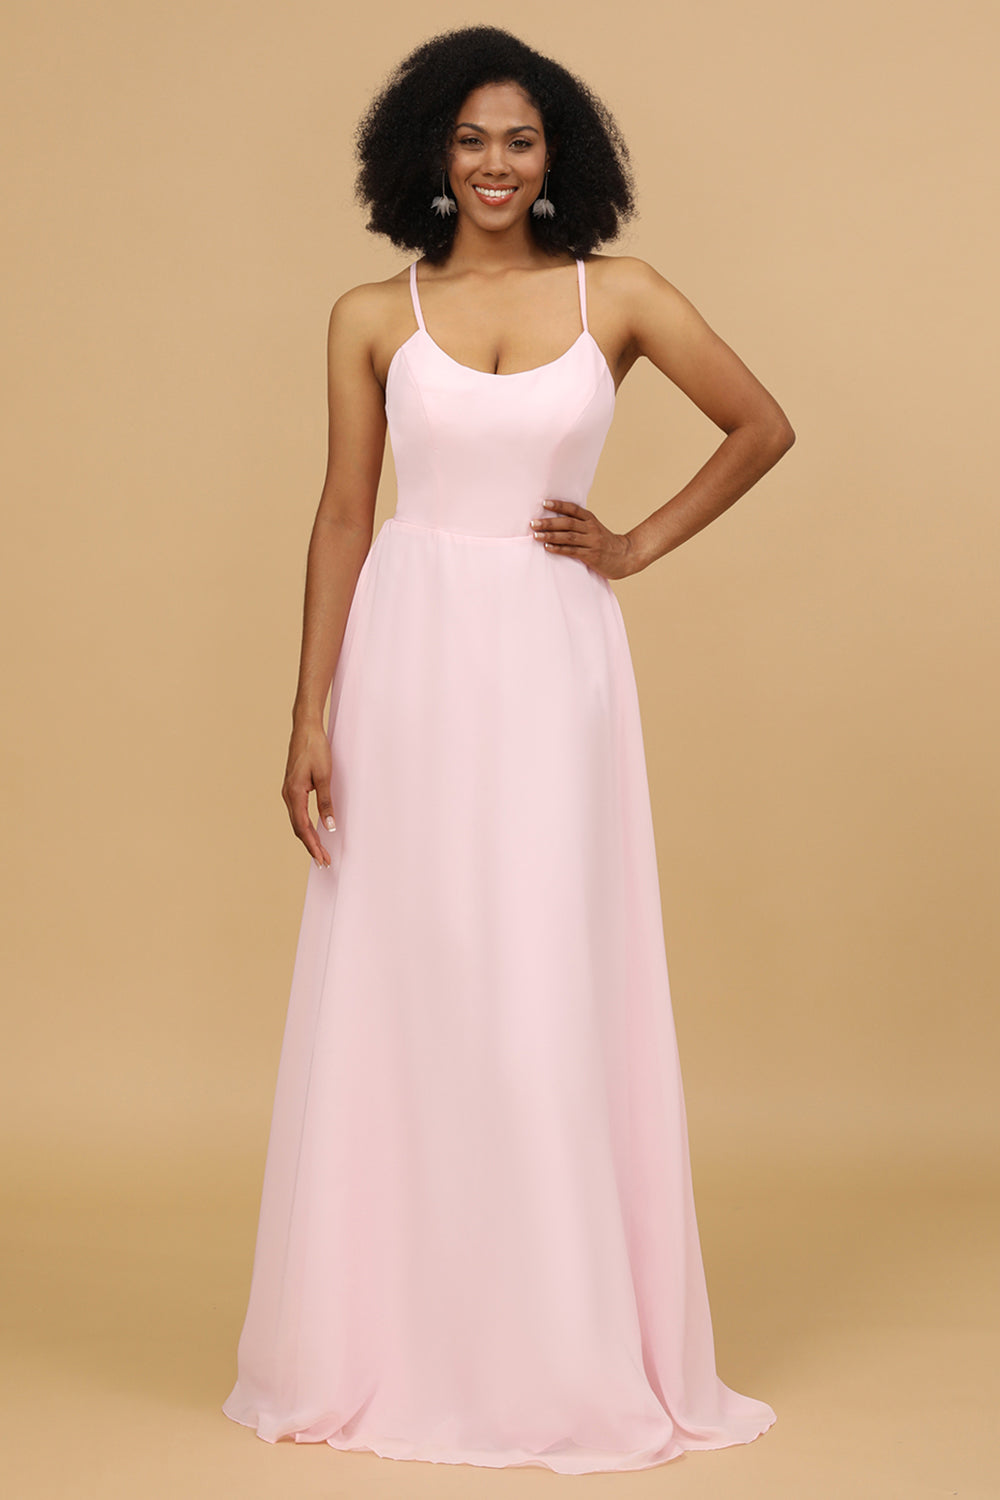 Pink Sheath/Column Spaghetti Straps Long Chiffon Bridesmaid Dress